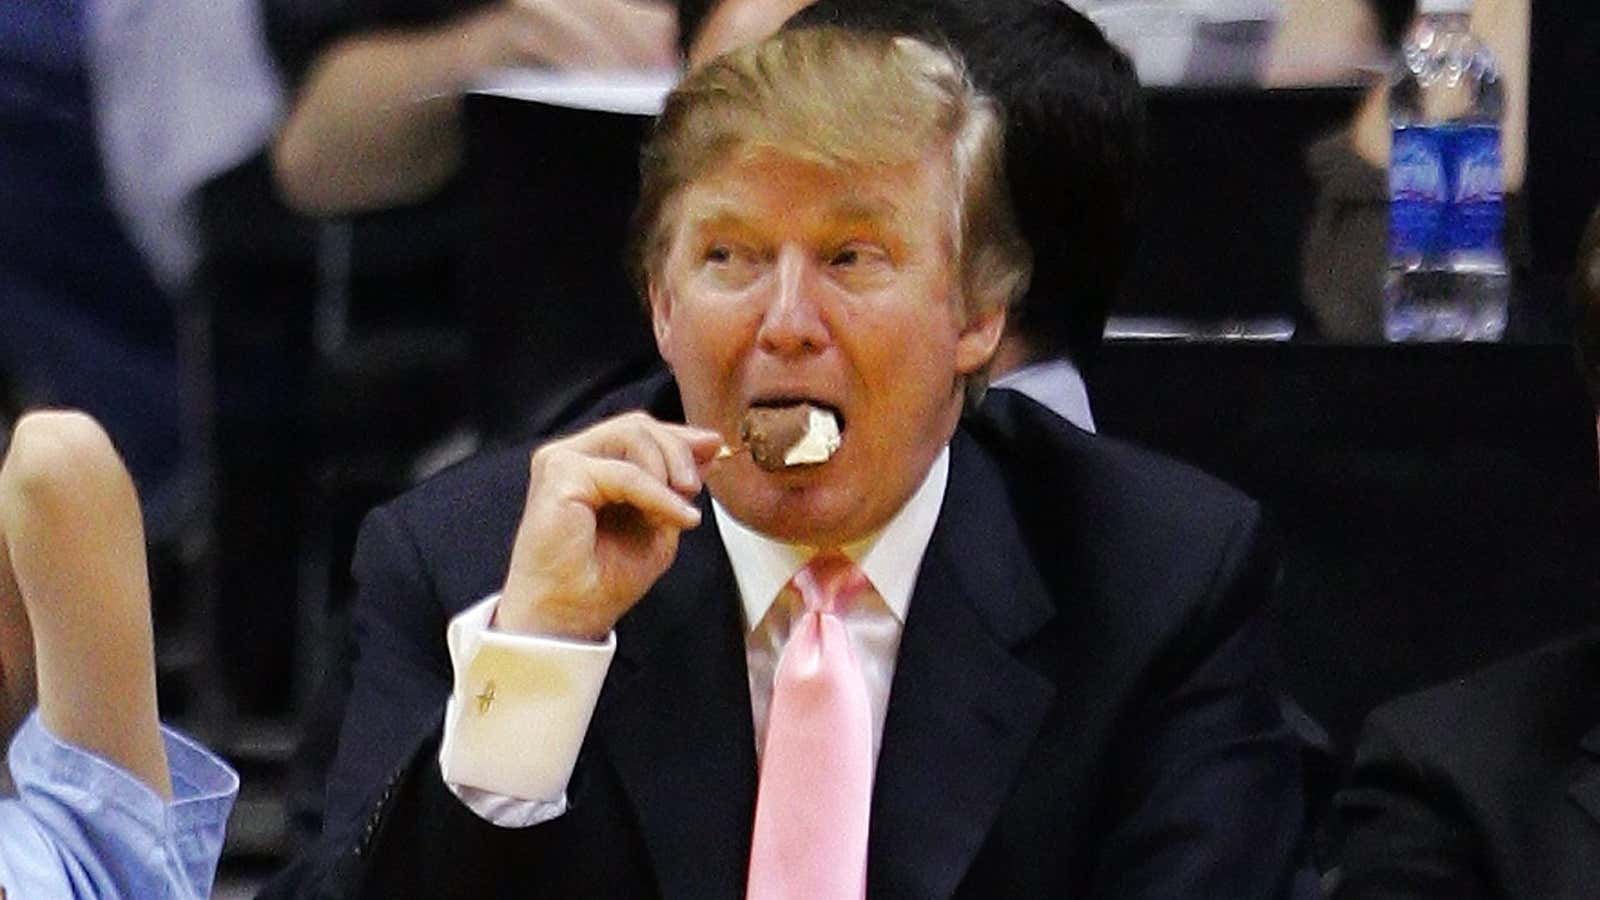 Trump enjoys an ice cream bar at a 2005 basketball match.